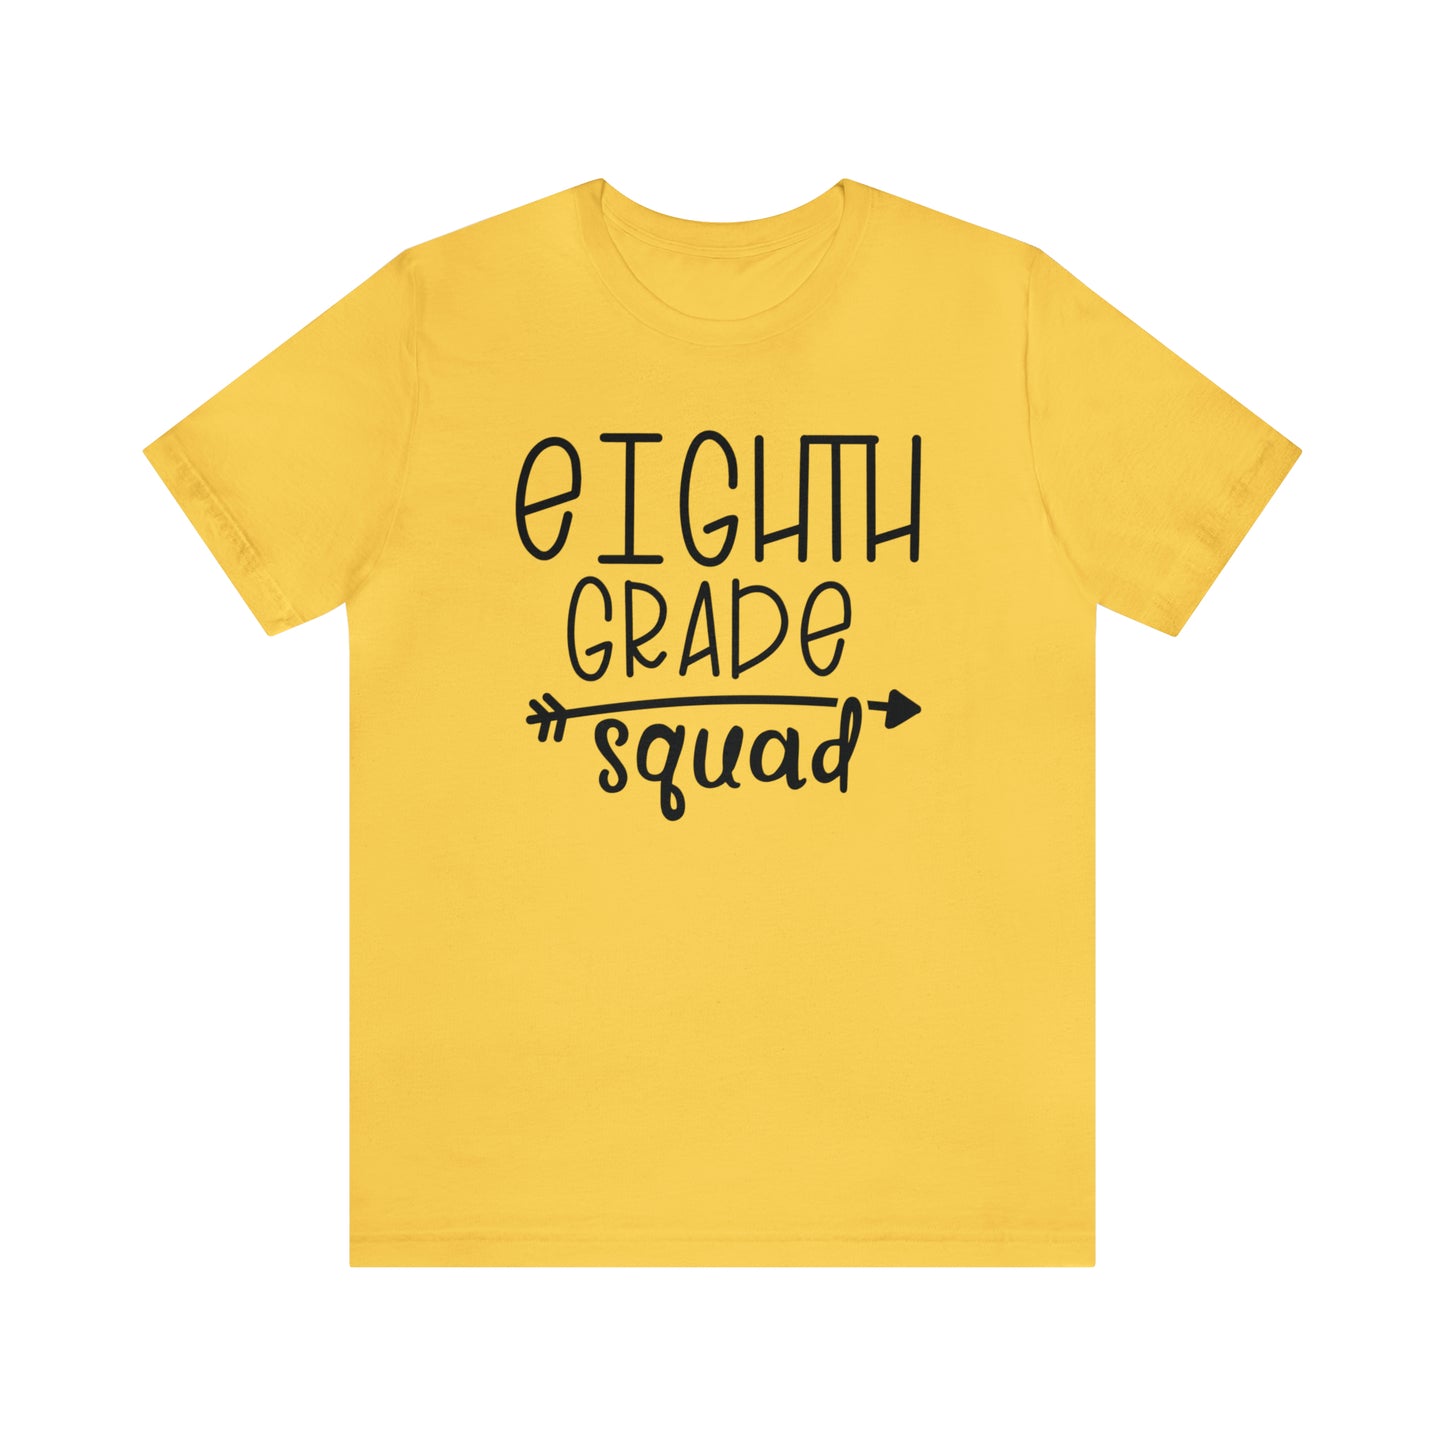 Eight grade squad Tee